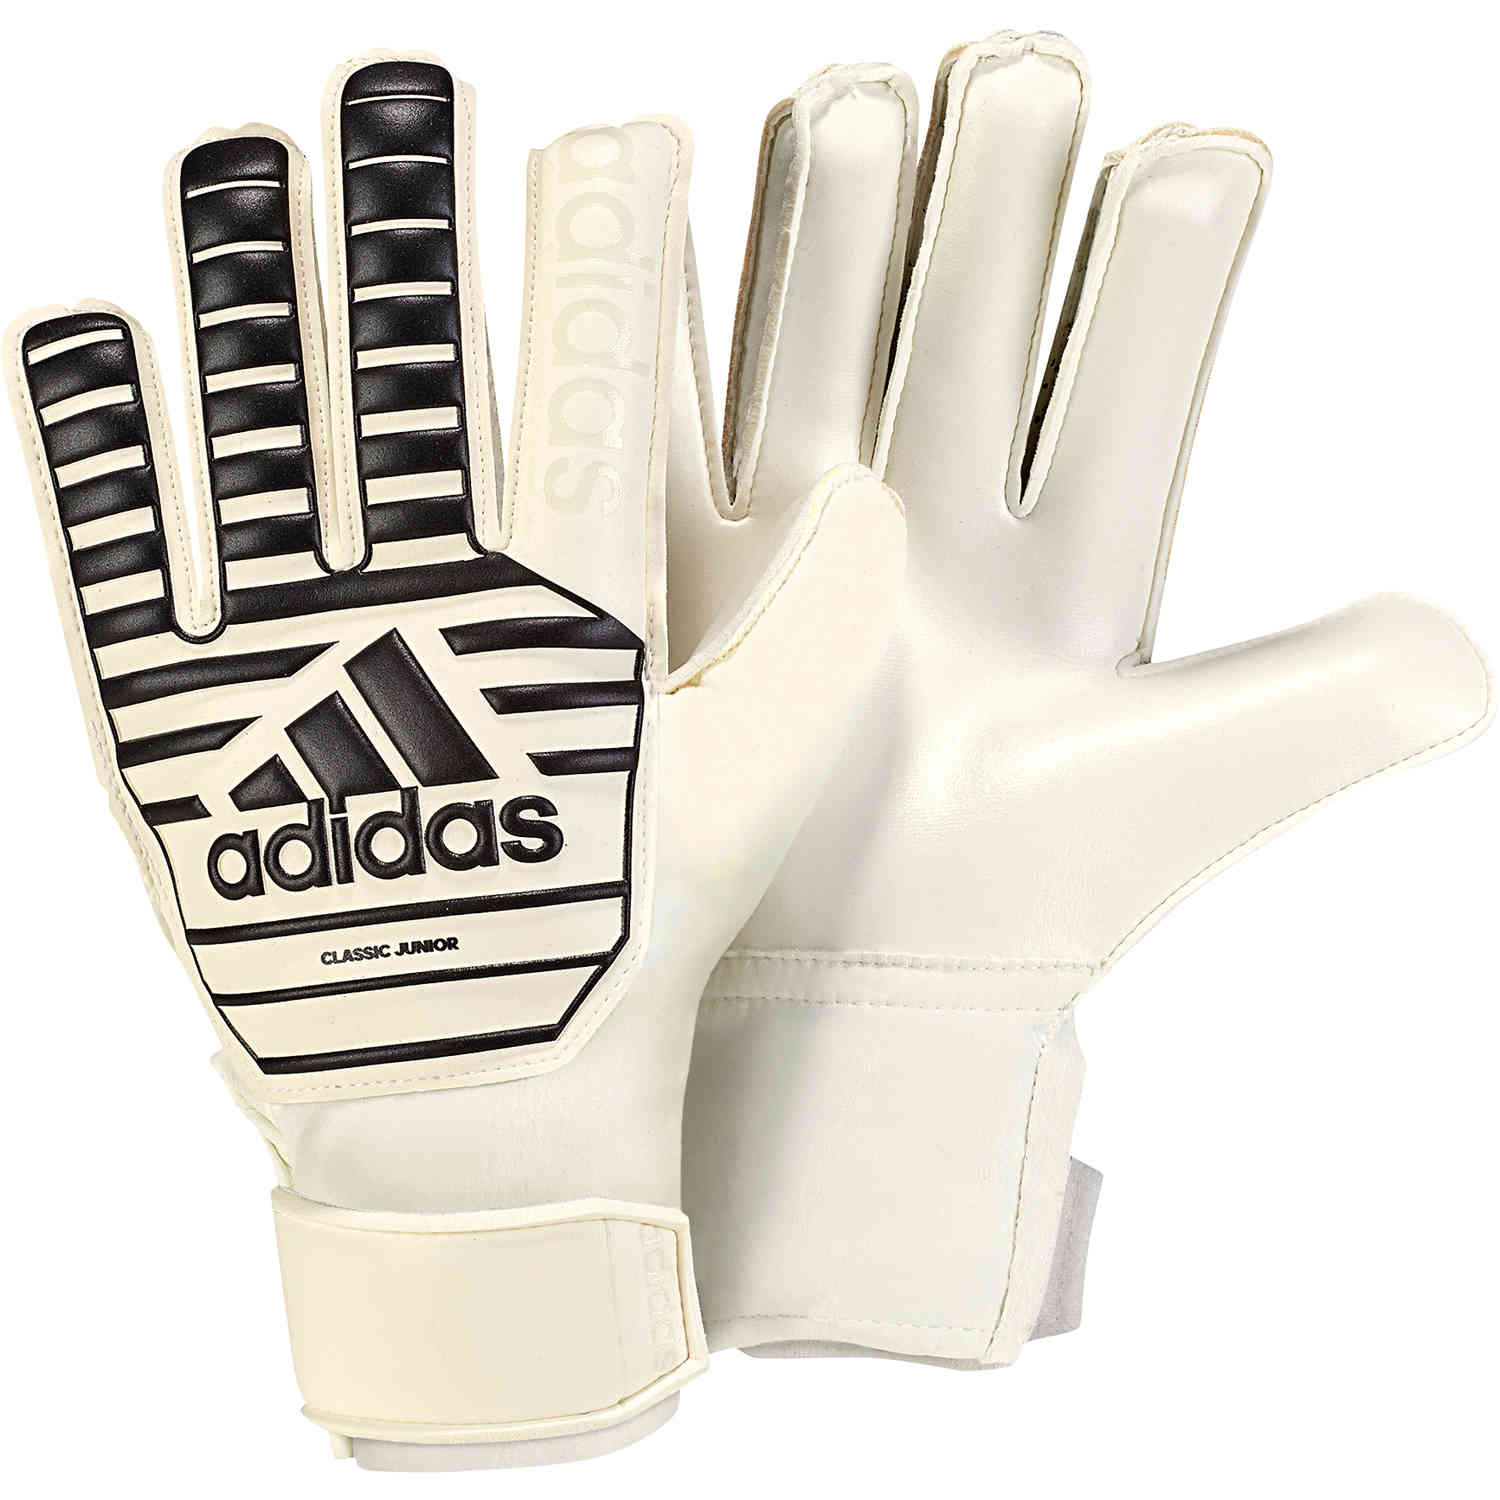 adidas goalkeeper gloves white